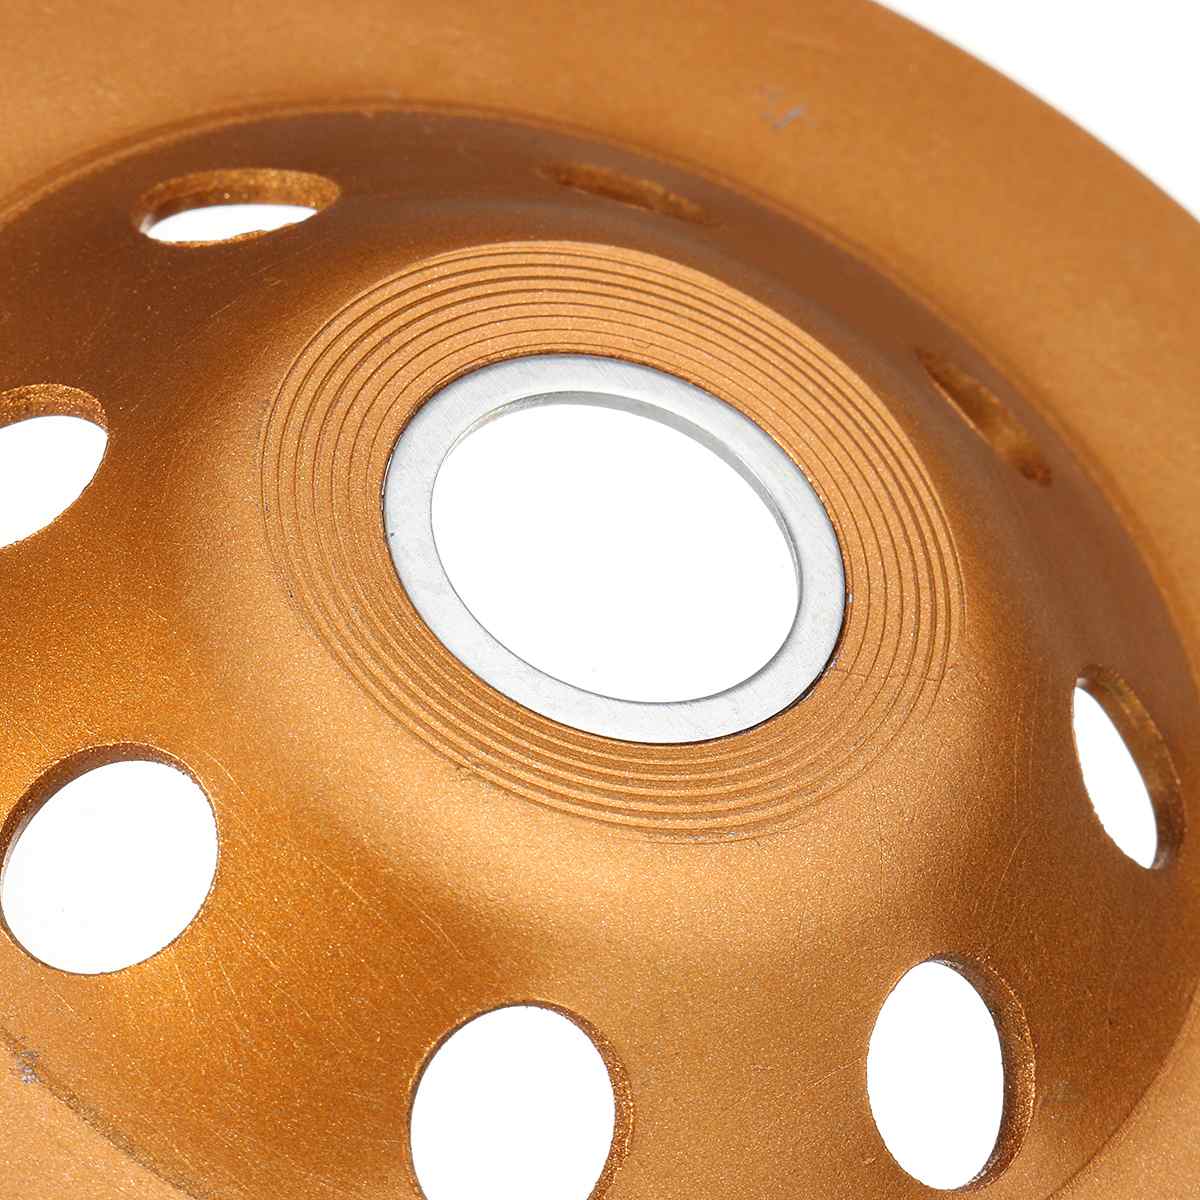 100mm Segment Grinding Wheel Diamond Grind Cup Disc Concrete Granite Stone Grinder DIY Power Tool Ceramics Metalworking